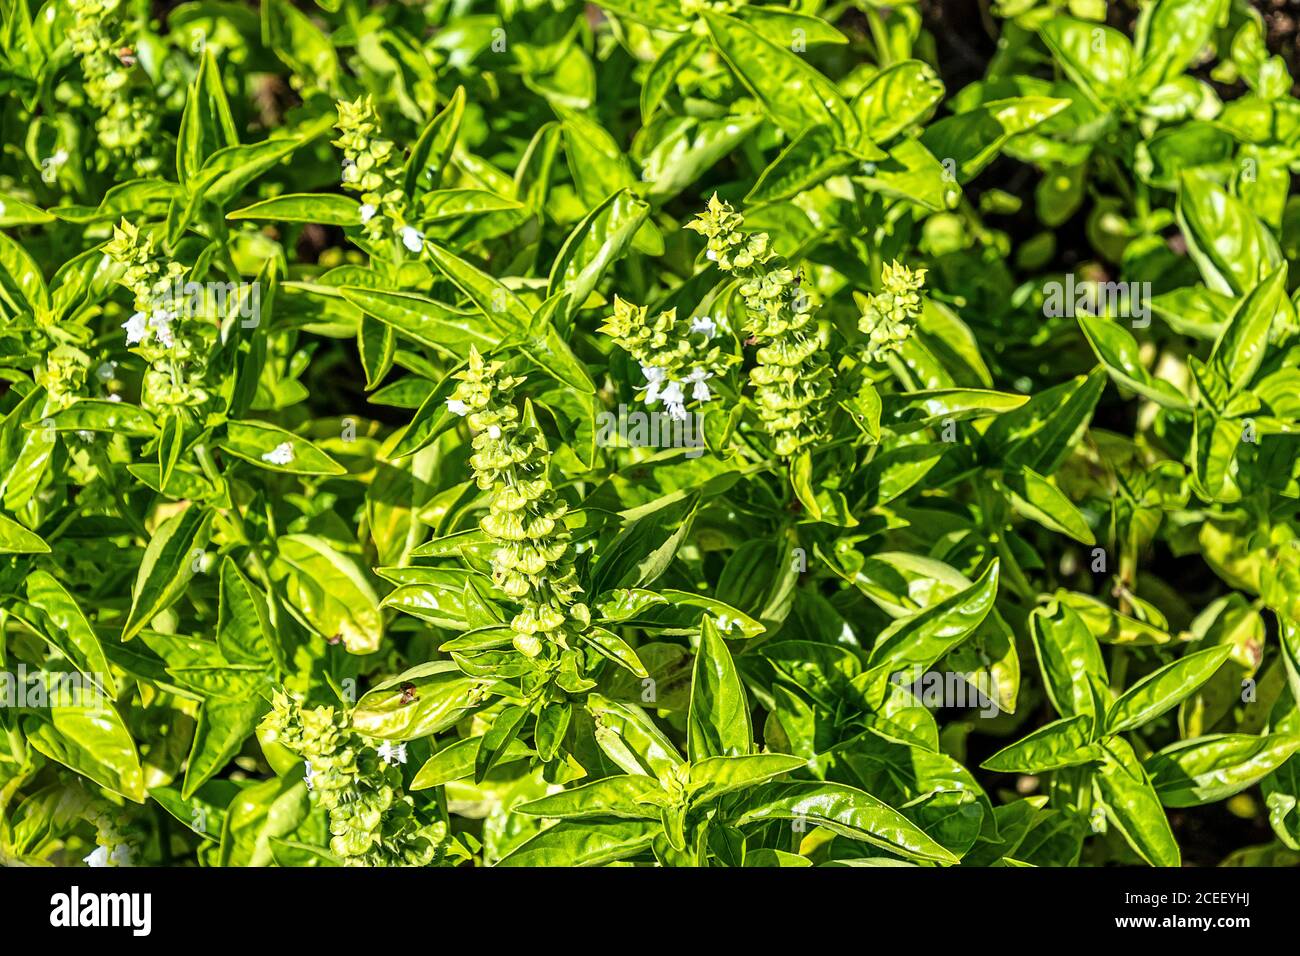 Culinary herb background - Ocimum Basilicum flowering plants Stock Photo